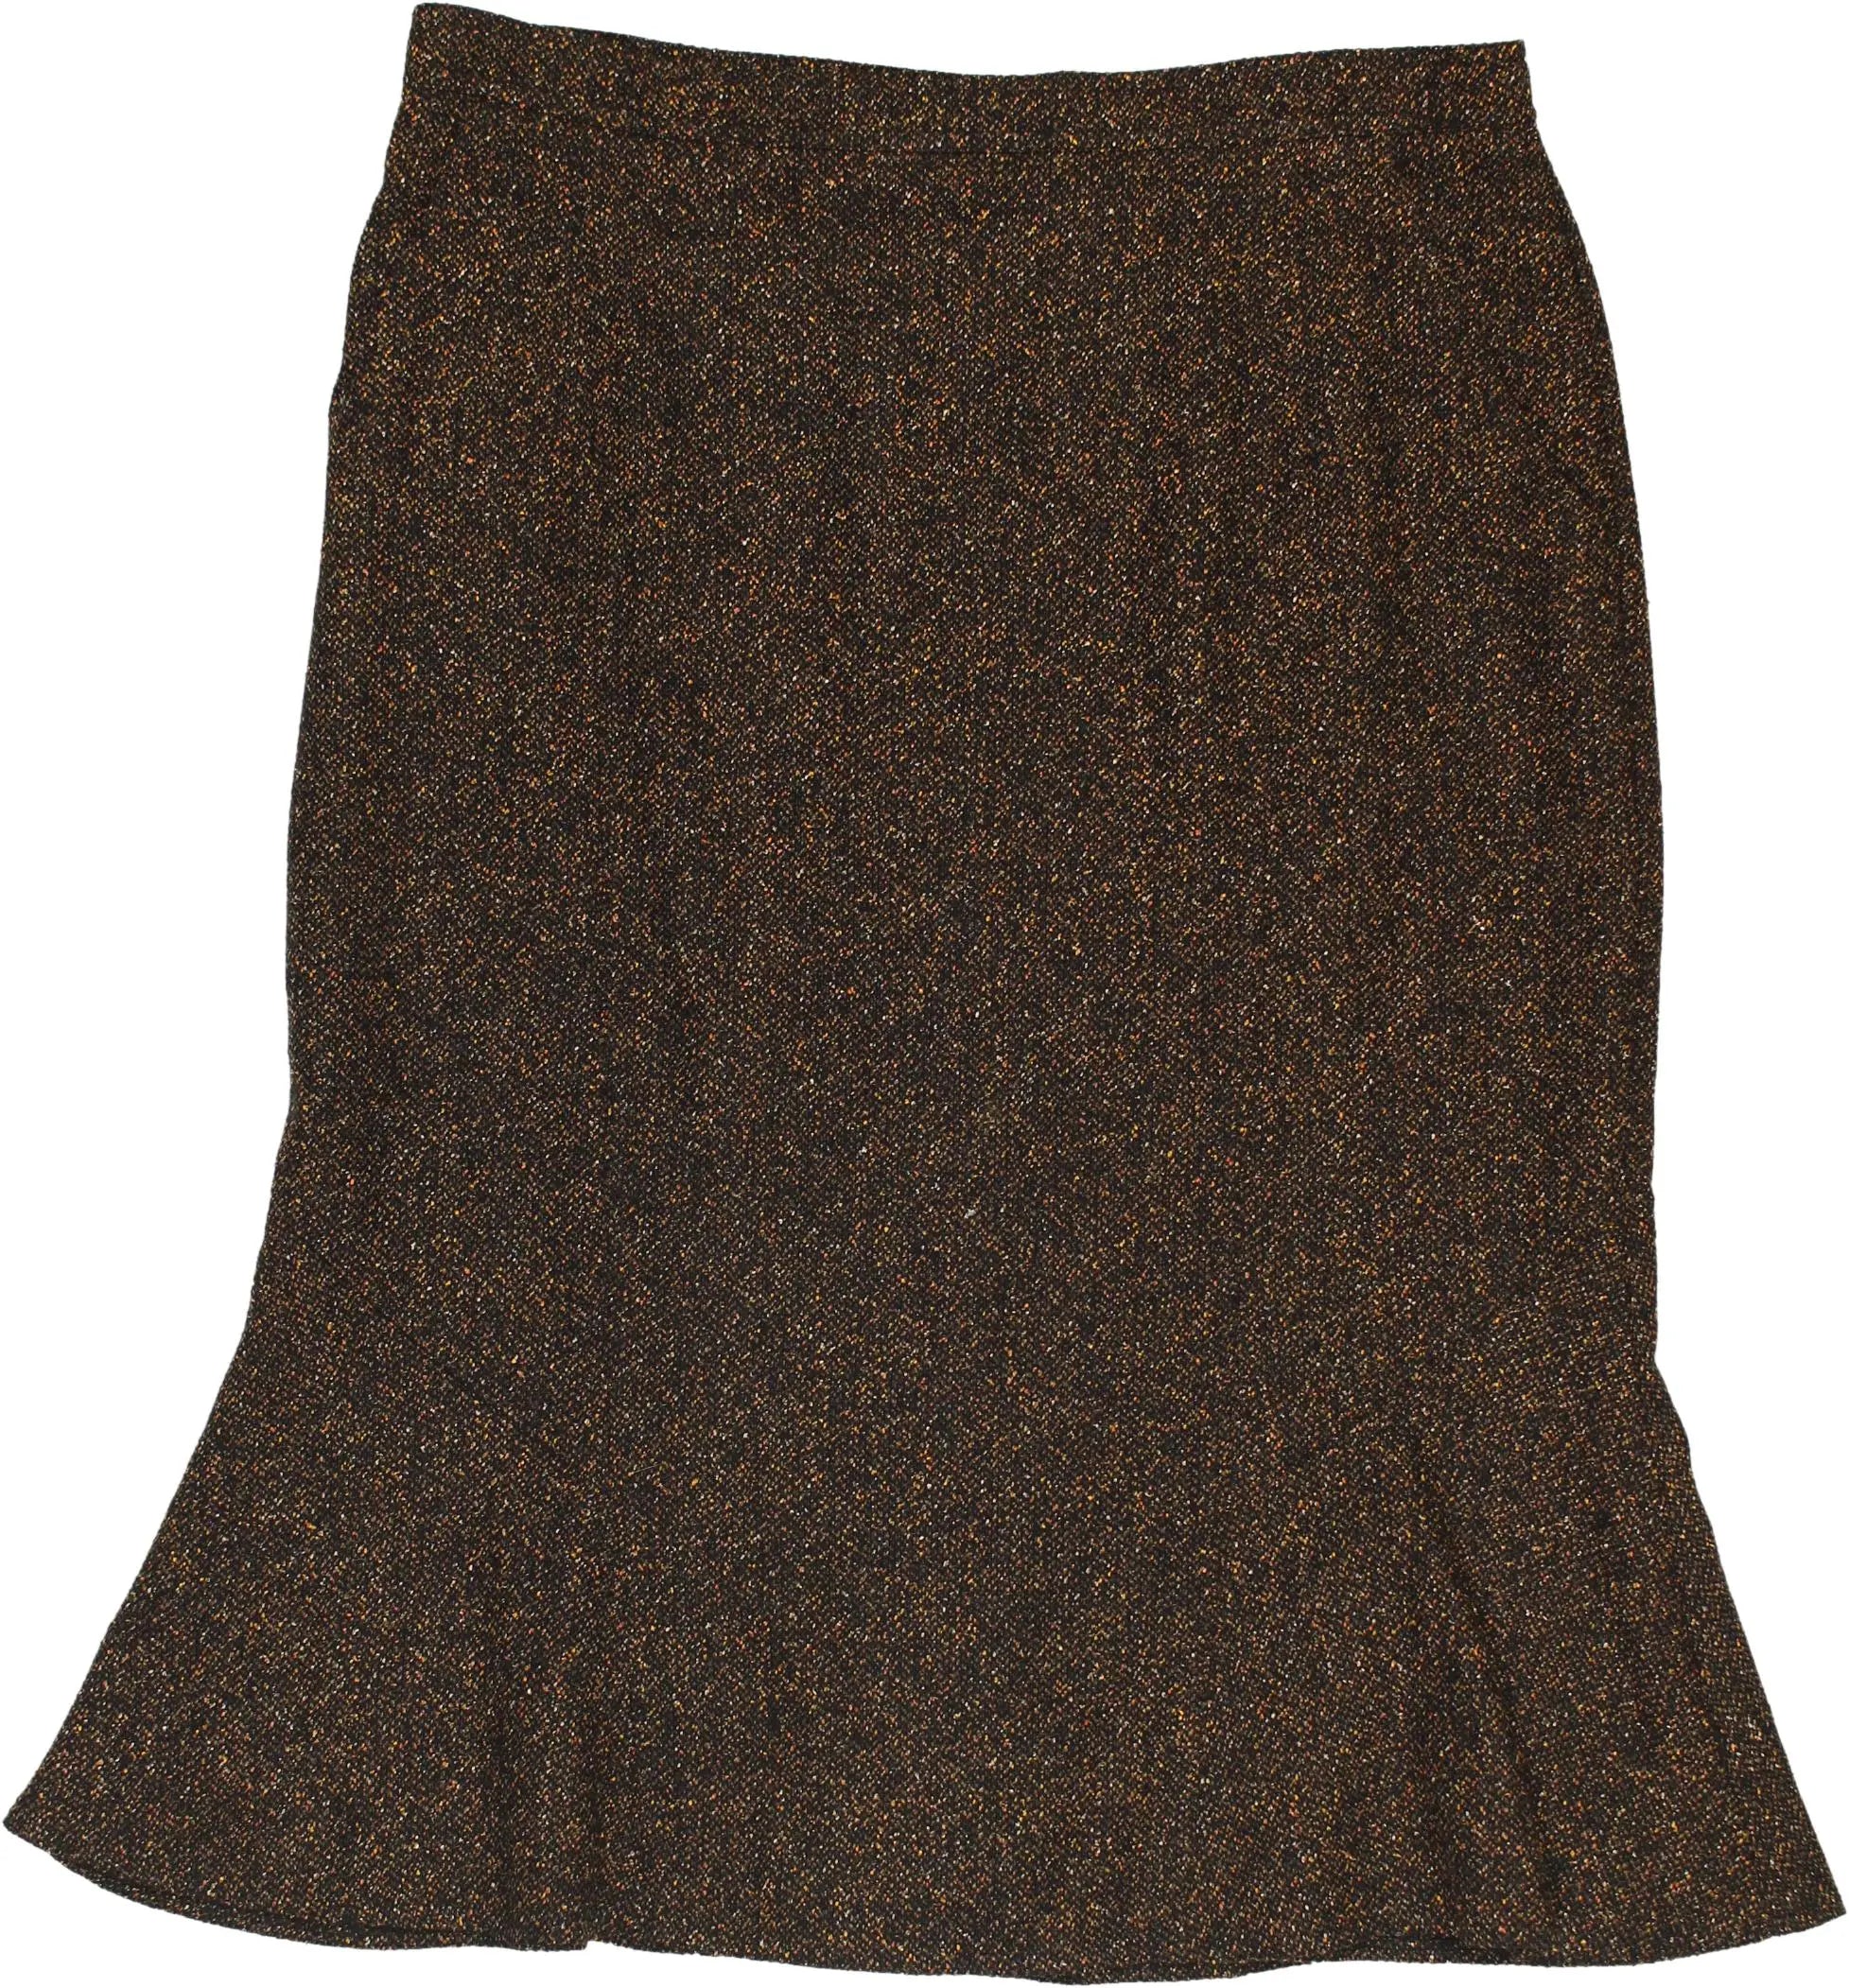 Seda Fashion - Skirt- ThriftTale.com - Vintage and second handclothing